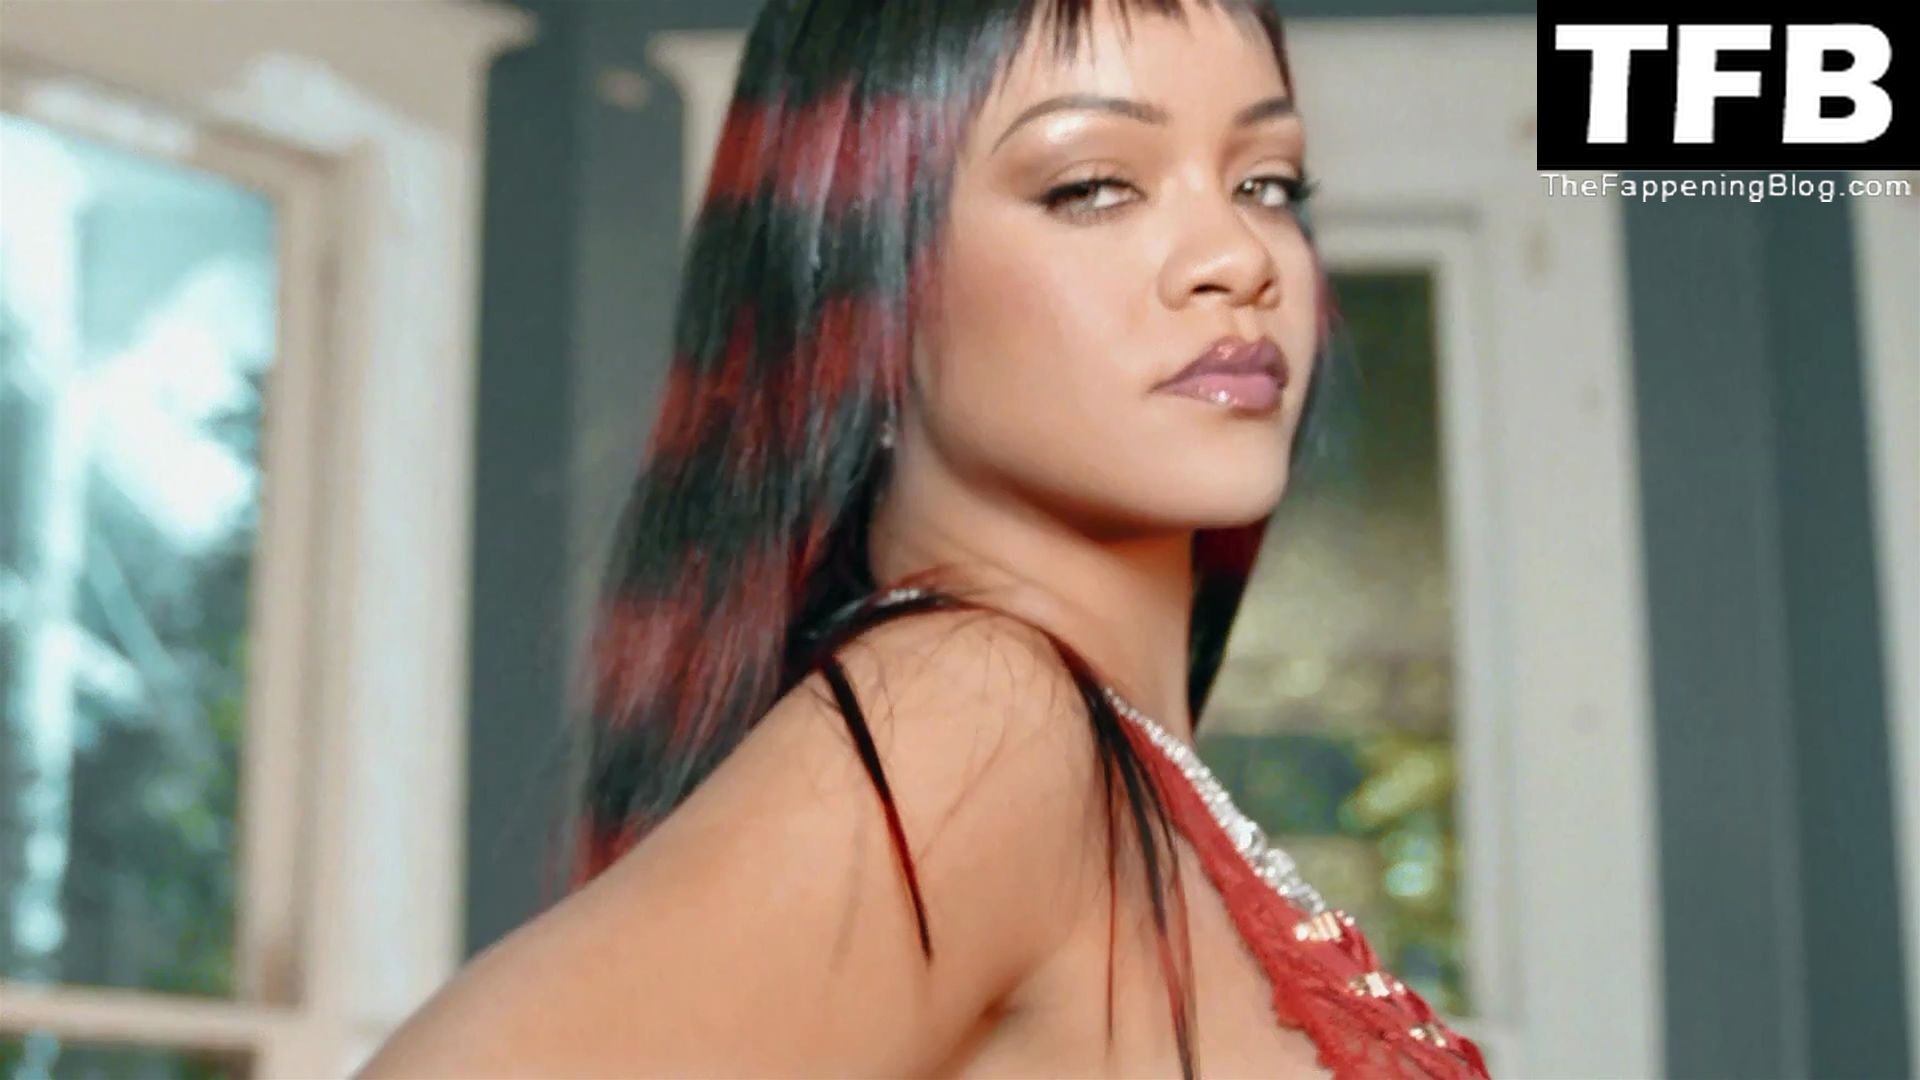 Rihanna-Sexy-Love-On-the-Edge-The-Fappening-Blog-41.jpg